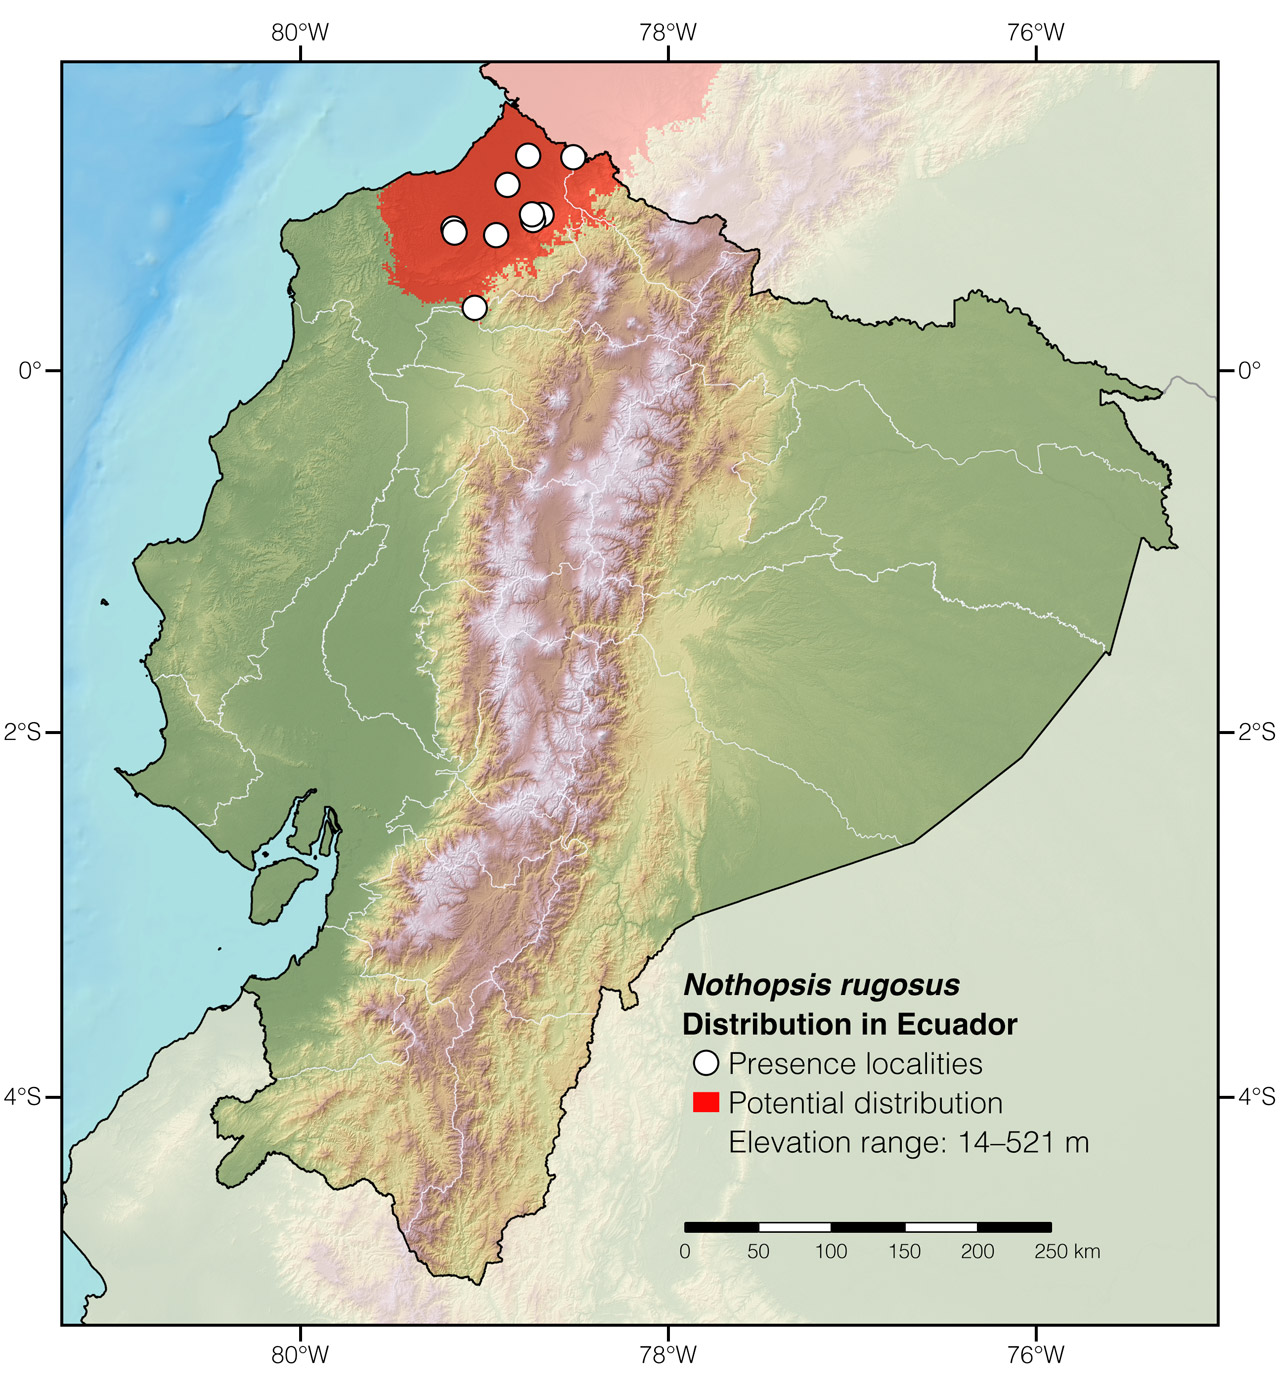 Distribution of Nothopsis rugosus in Ecuador